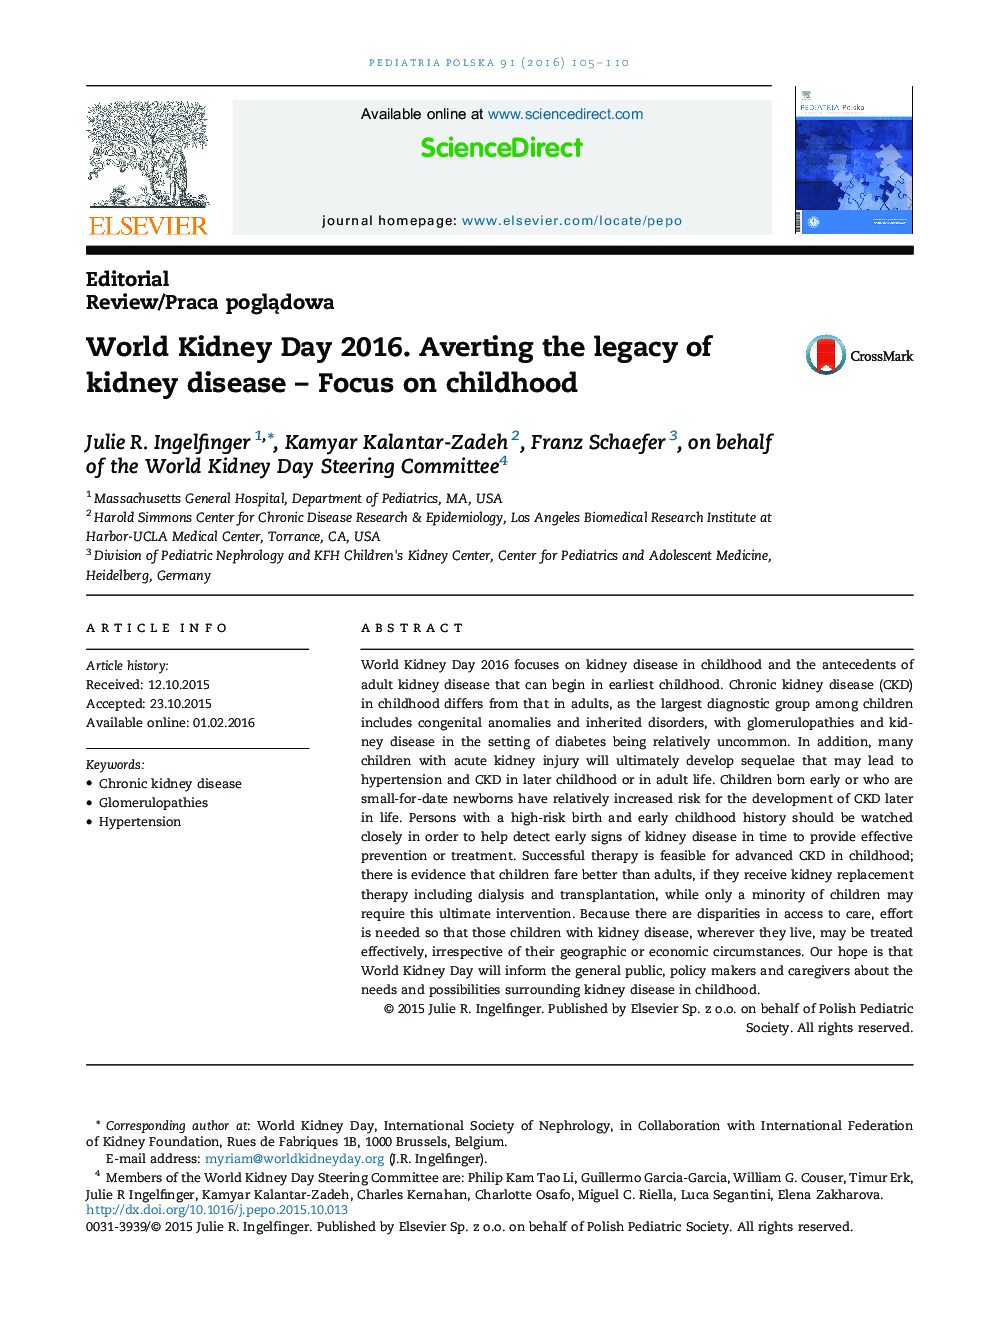 World Kidney Day 2016. Averting the legacy of kidney disease – Focus on childhood